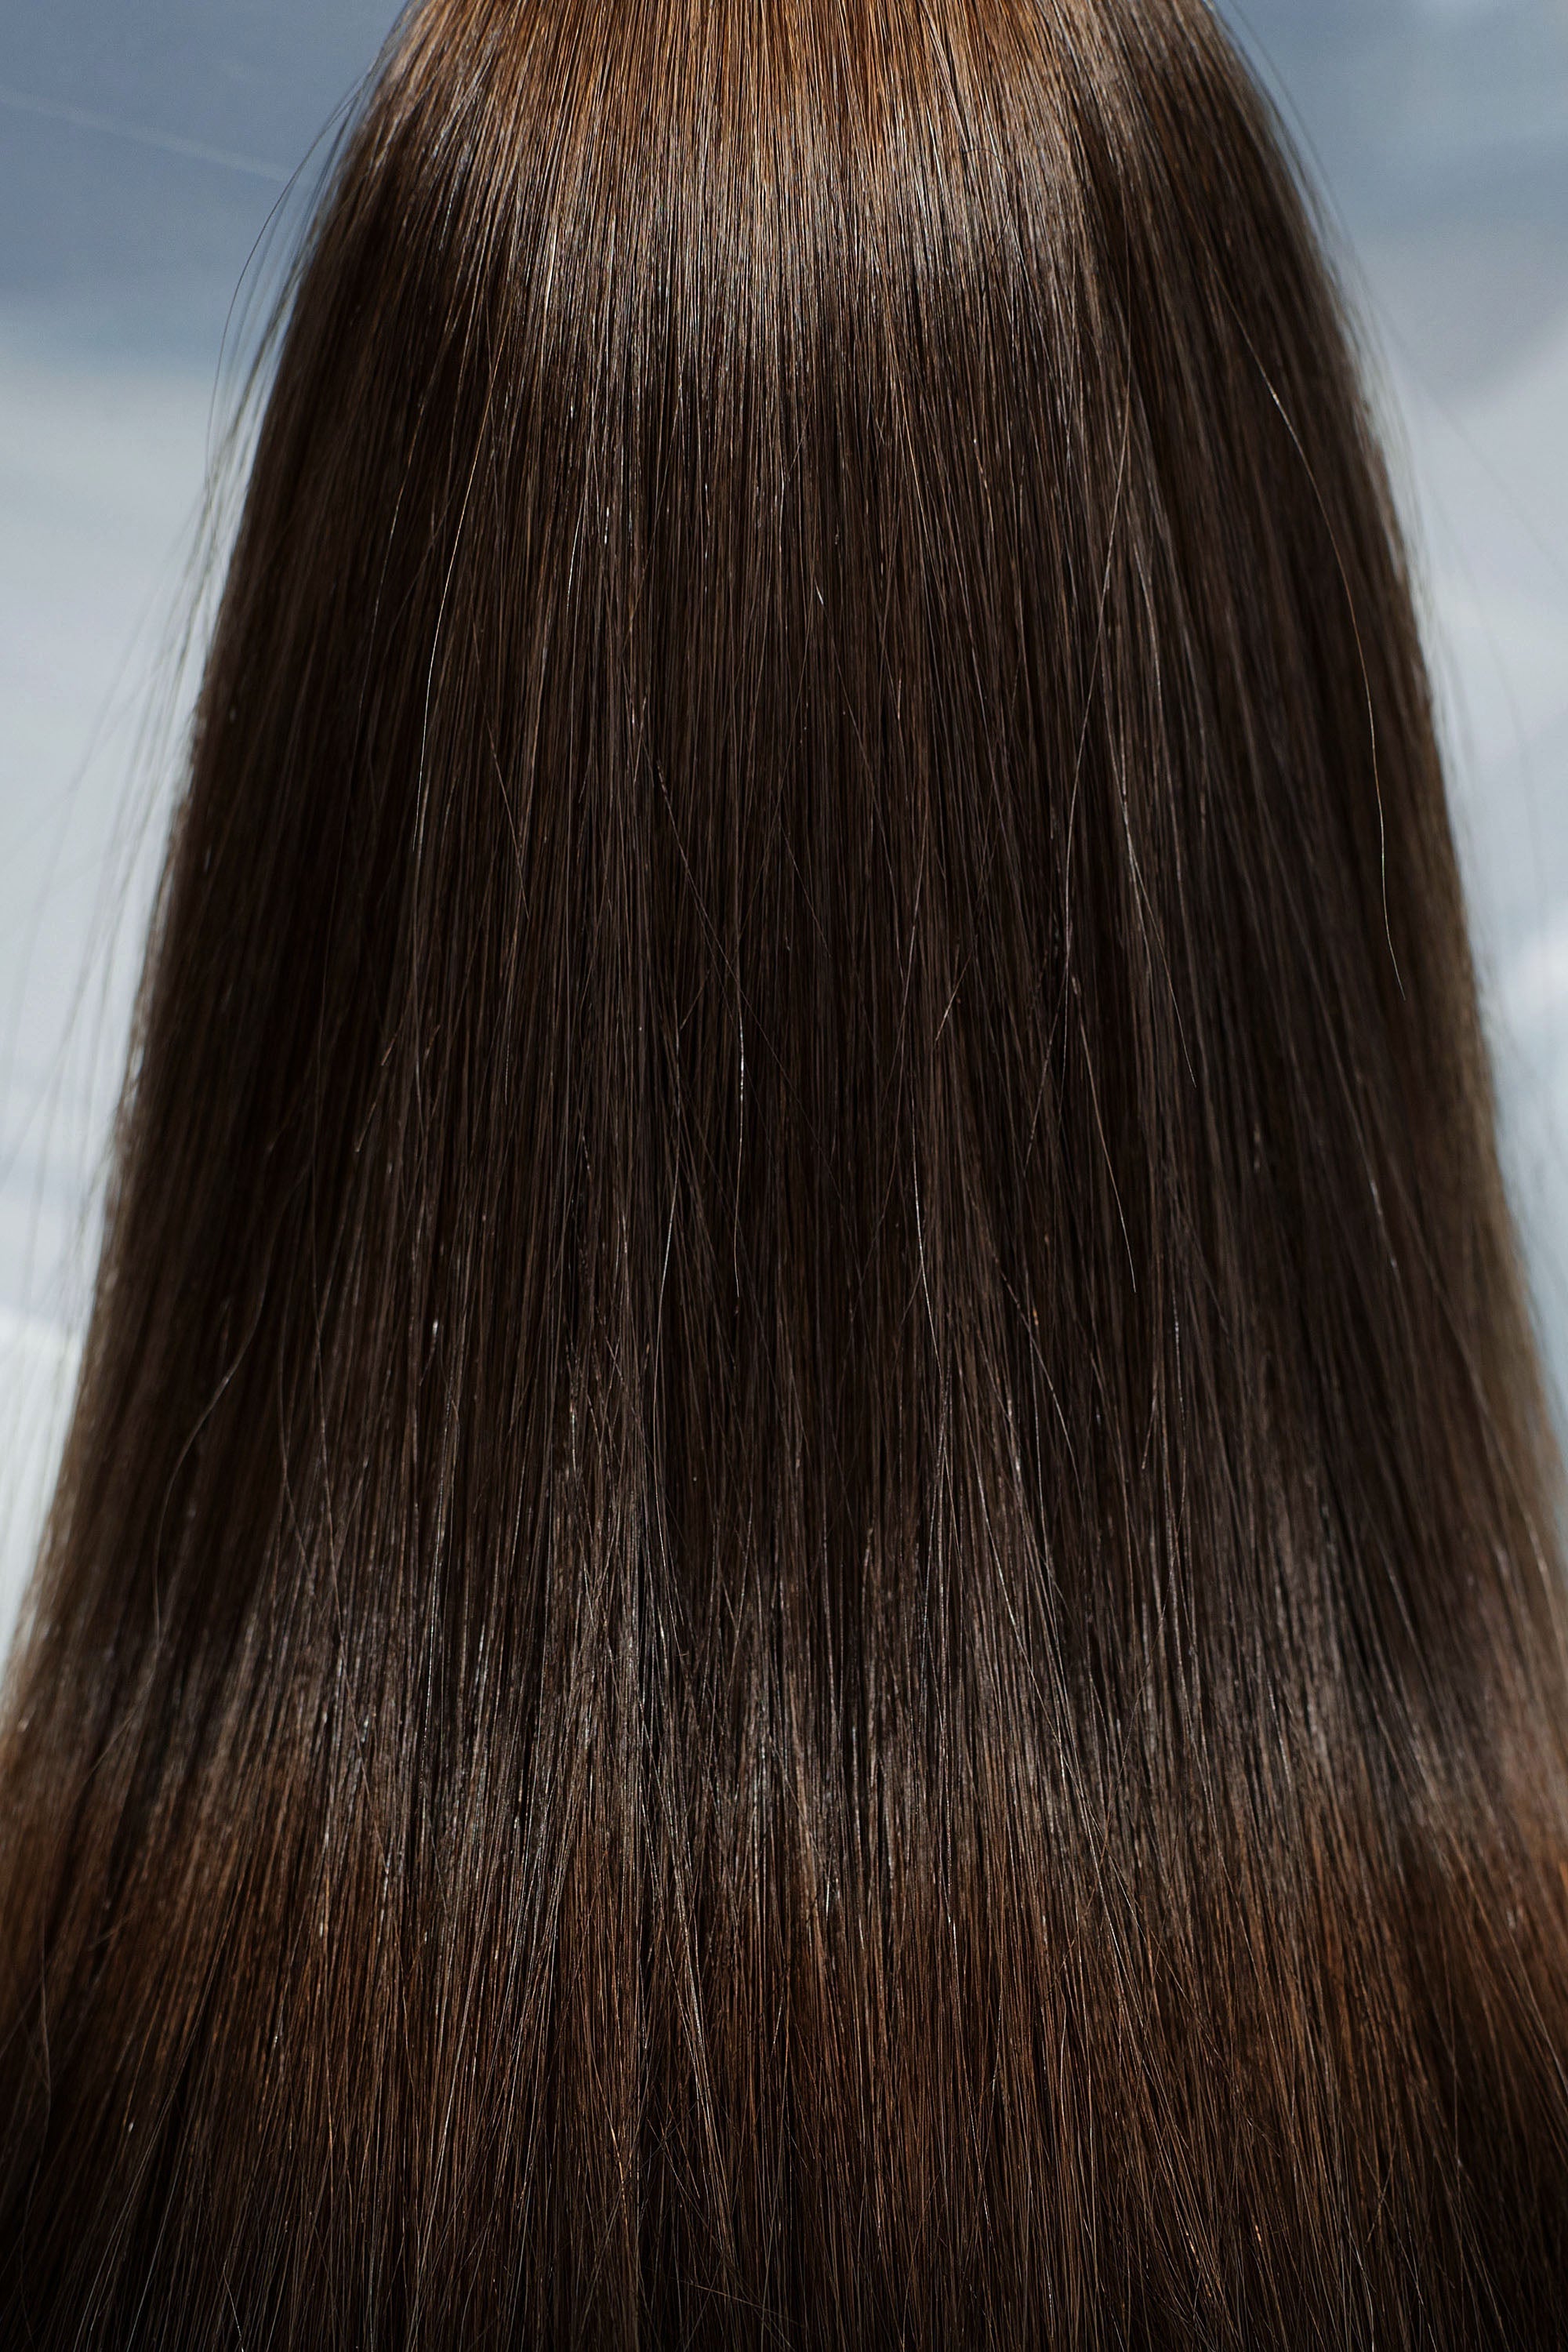 Behair professional Keratin Tip "Premium" 24" (60cm) Natural Straight Light Brown #4 - 25g (Micro - 0.5g each pcs) hair extensions